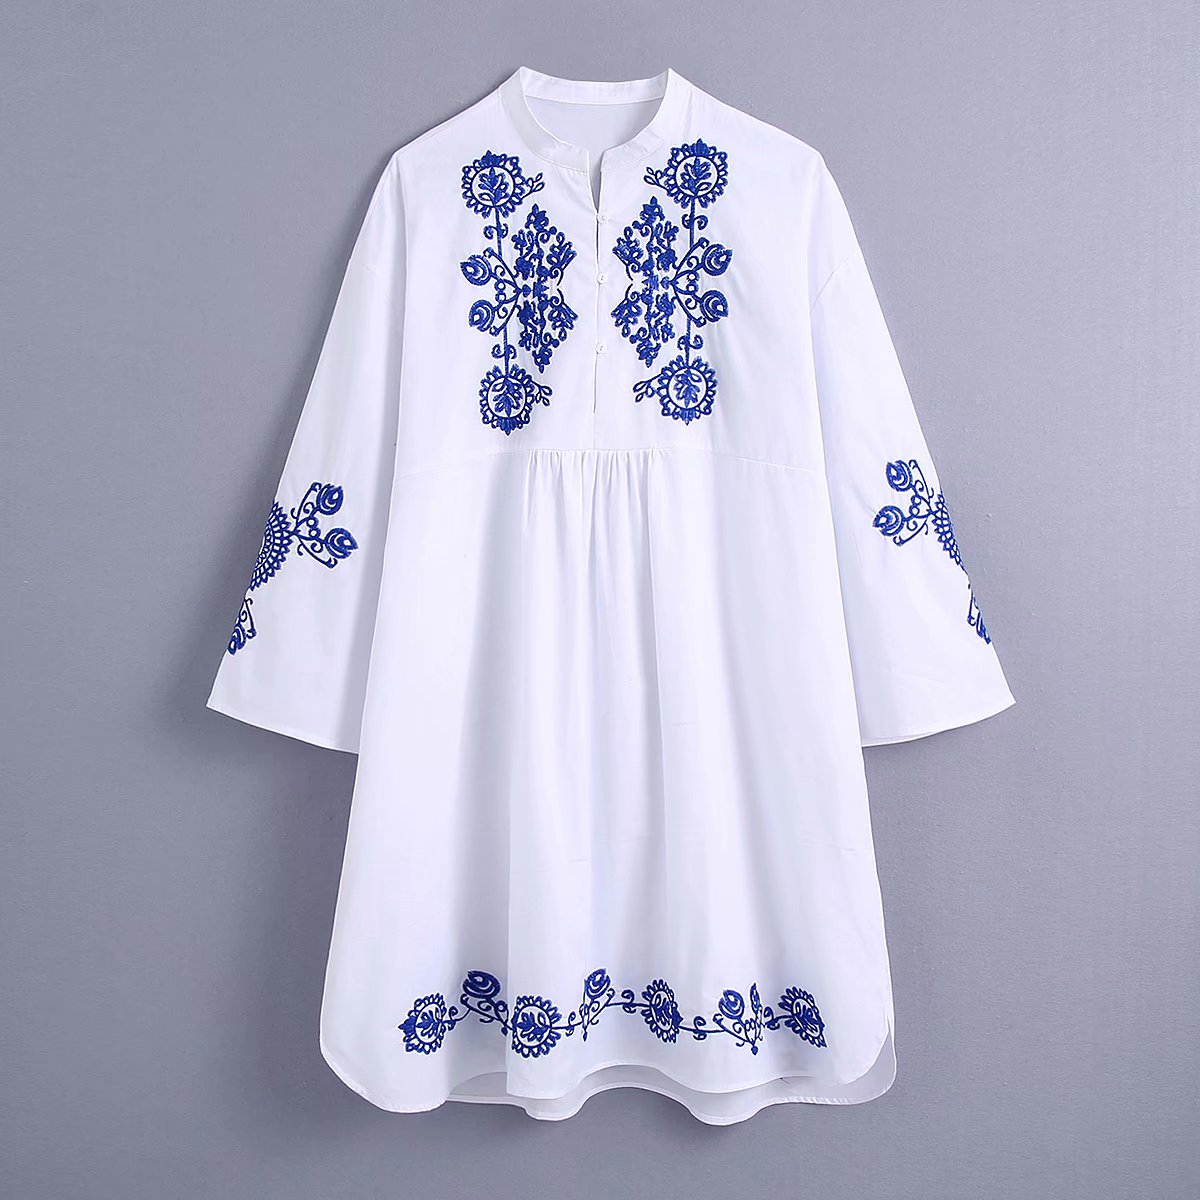 Zevity Women Vintage Stand Collar Totem Floral Embroidery White Mini Dress Female ChicThree Quarter Sleeve Kimono Vestido DS8693 alx